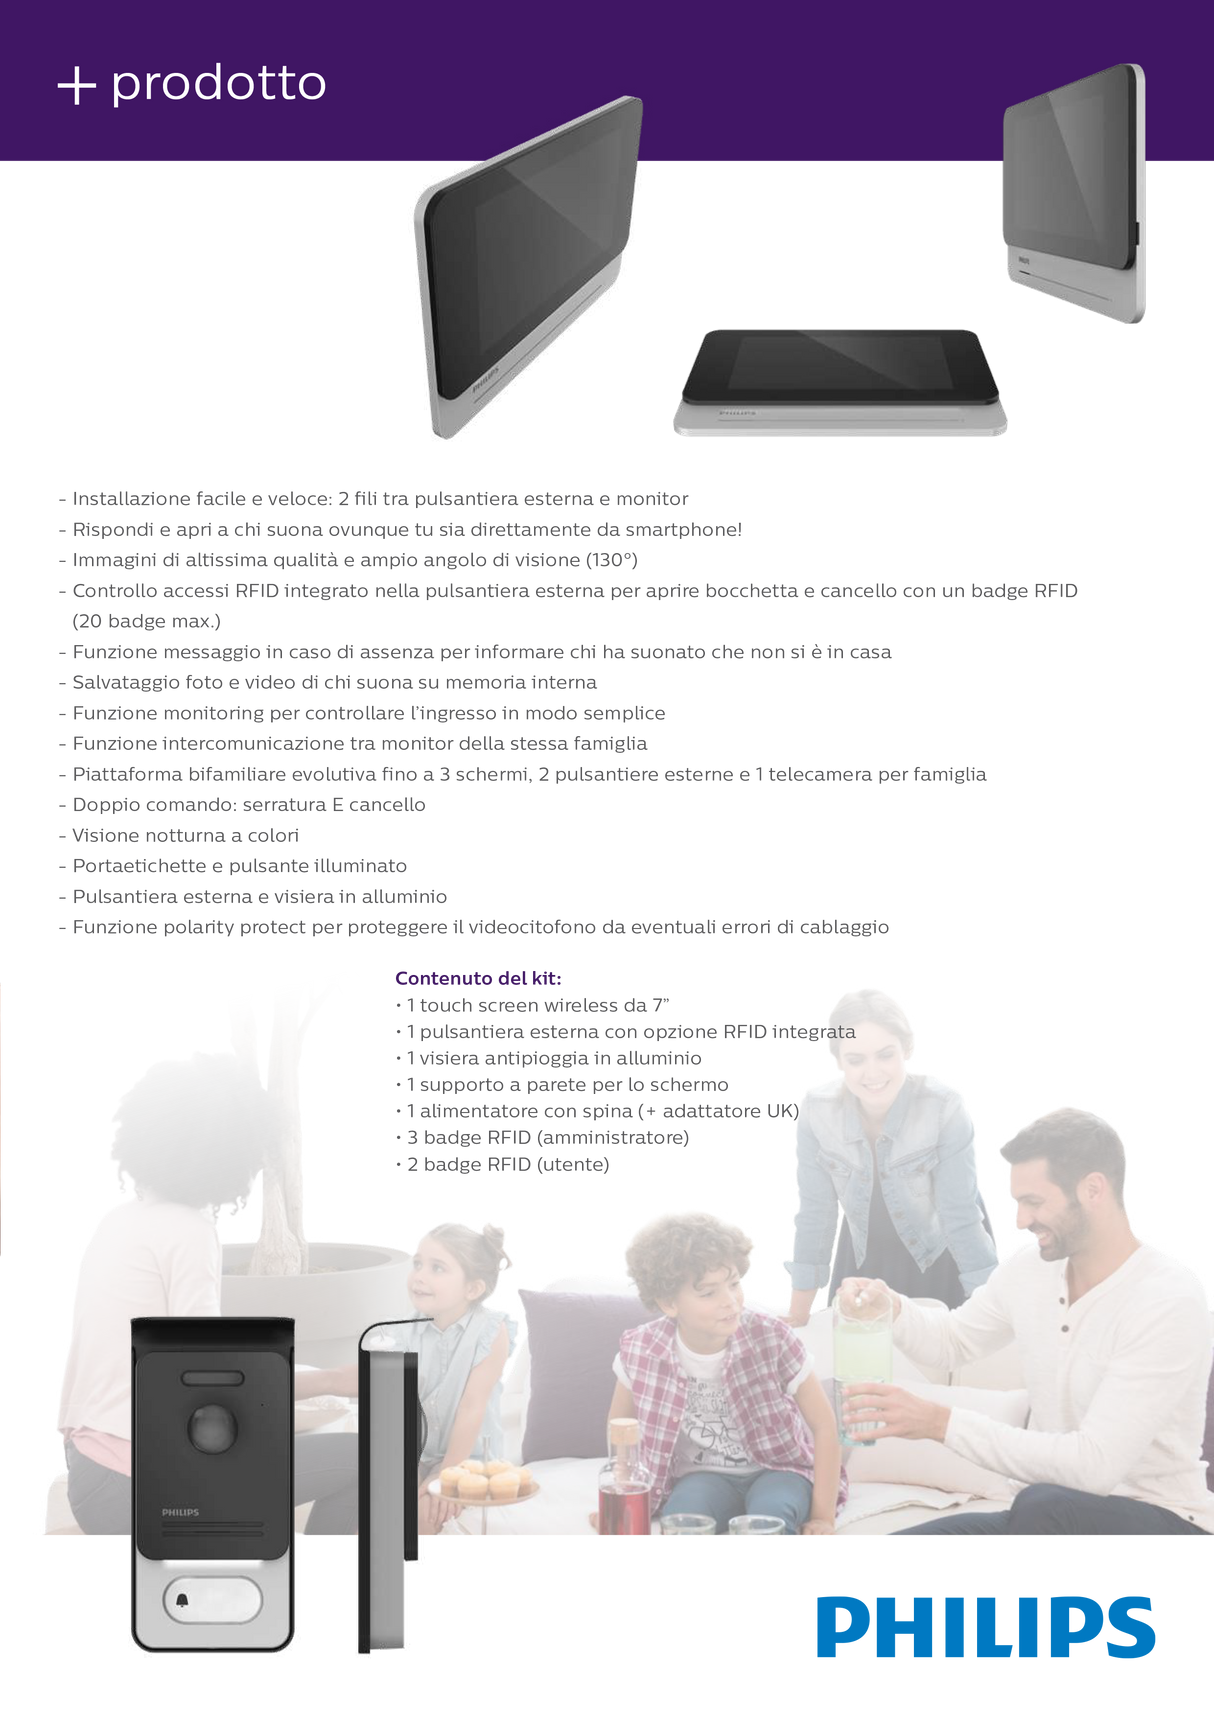 Wi-Fi-Video-Gegensprechanlage-Touchscreen-Monitor 7'' – WelcomeEye Connect 2 – Philips